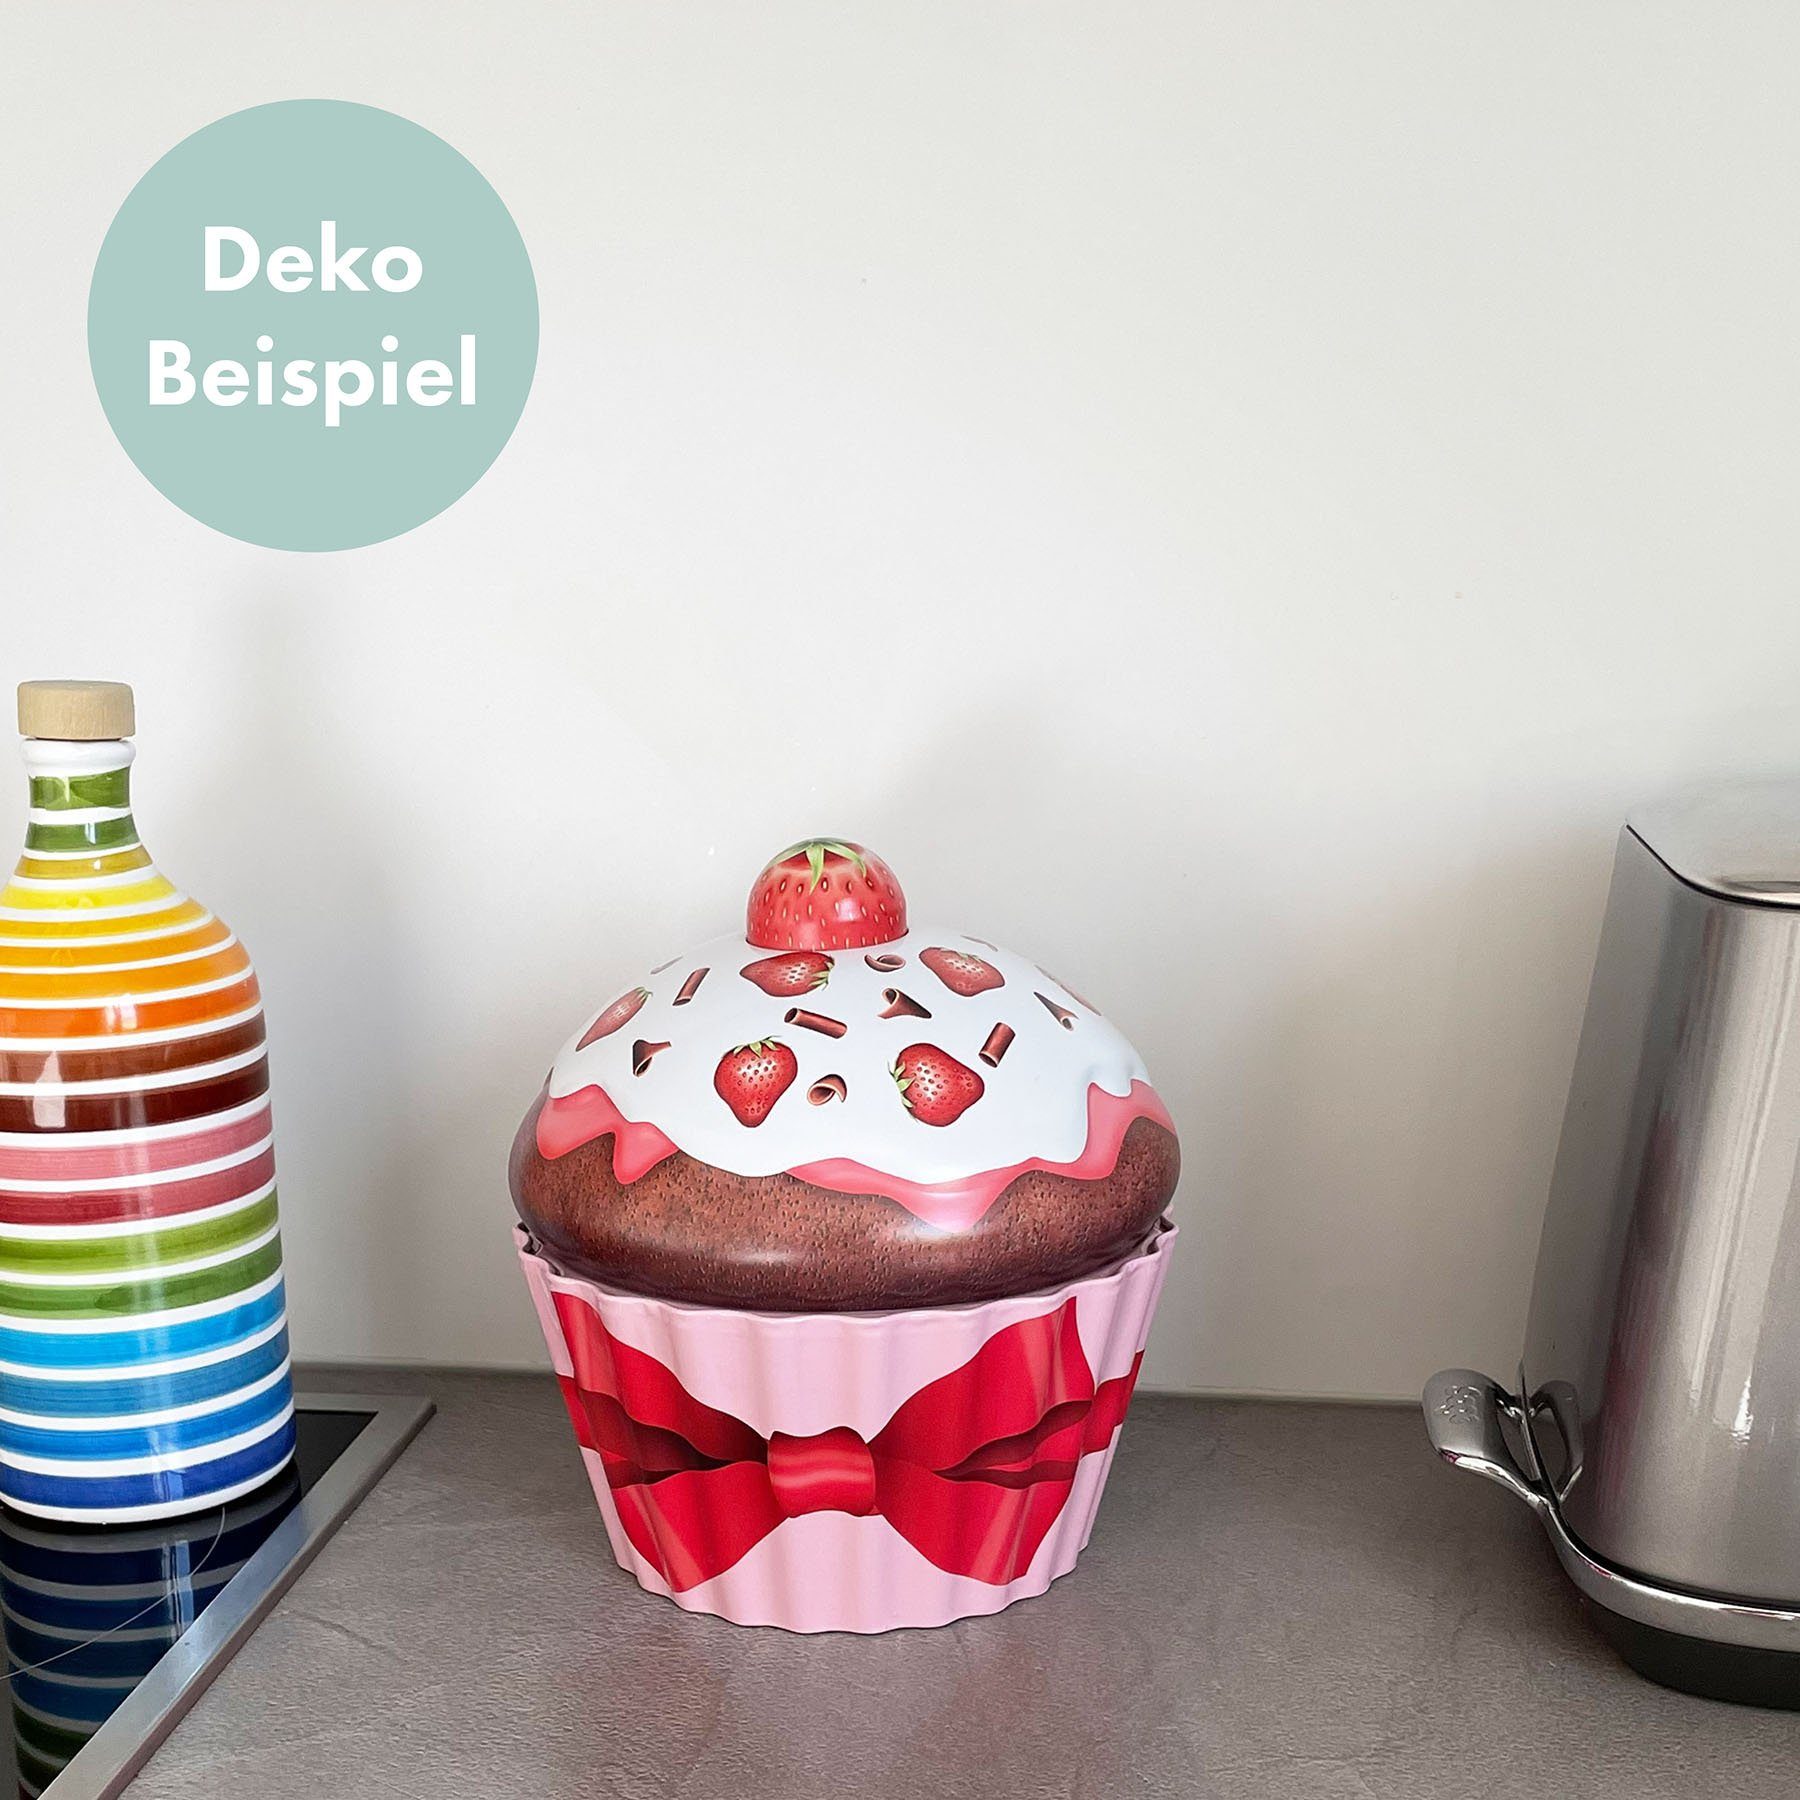 Blech, Blechdose POWERHAUS24 mit Erdbeeren cm, 16 XL-Cup x (Spar-Set) Cake 17 Keksdose